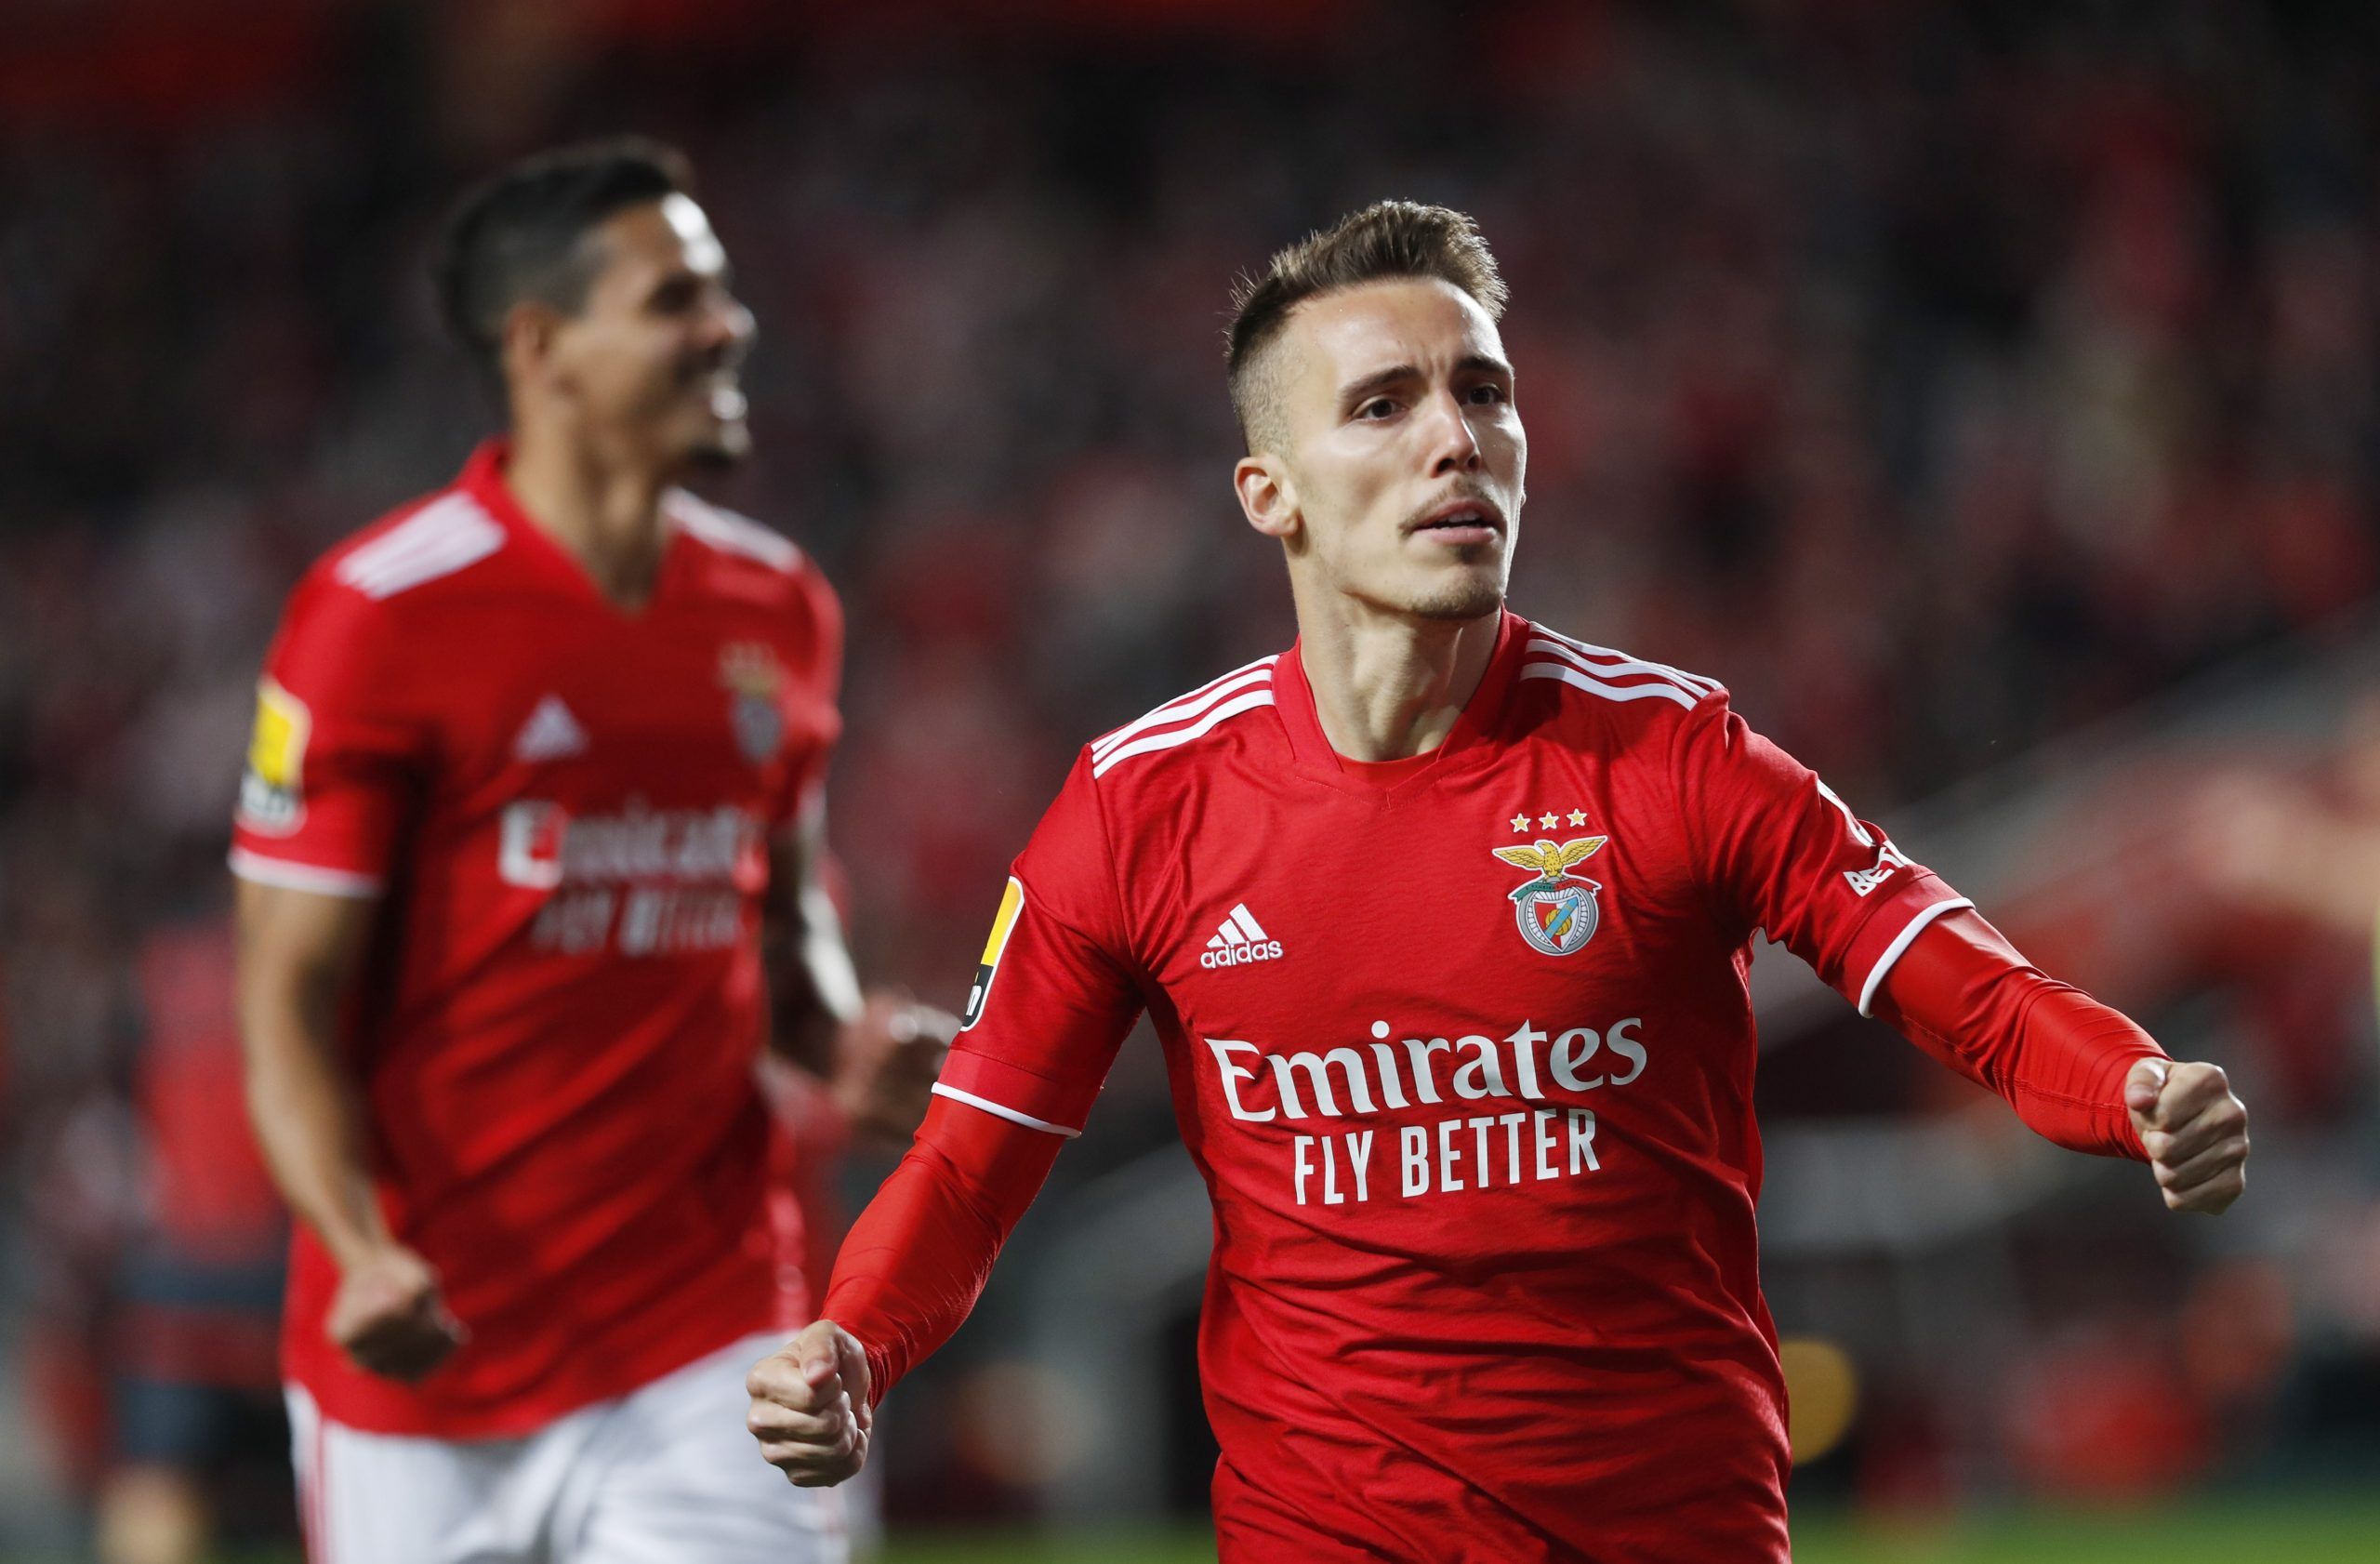 Grimaldo-Benfica-Arsenal-Premier-League-Arteta-Edu-transfer